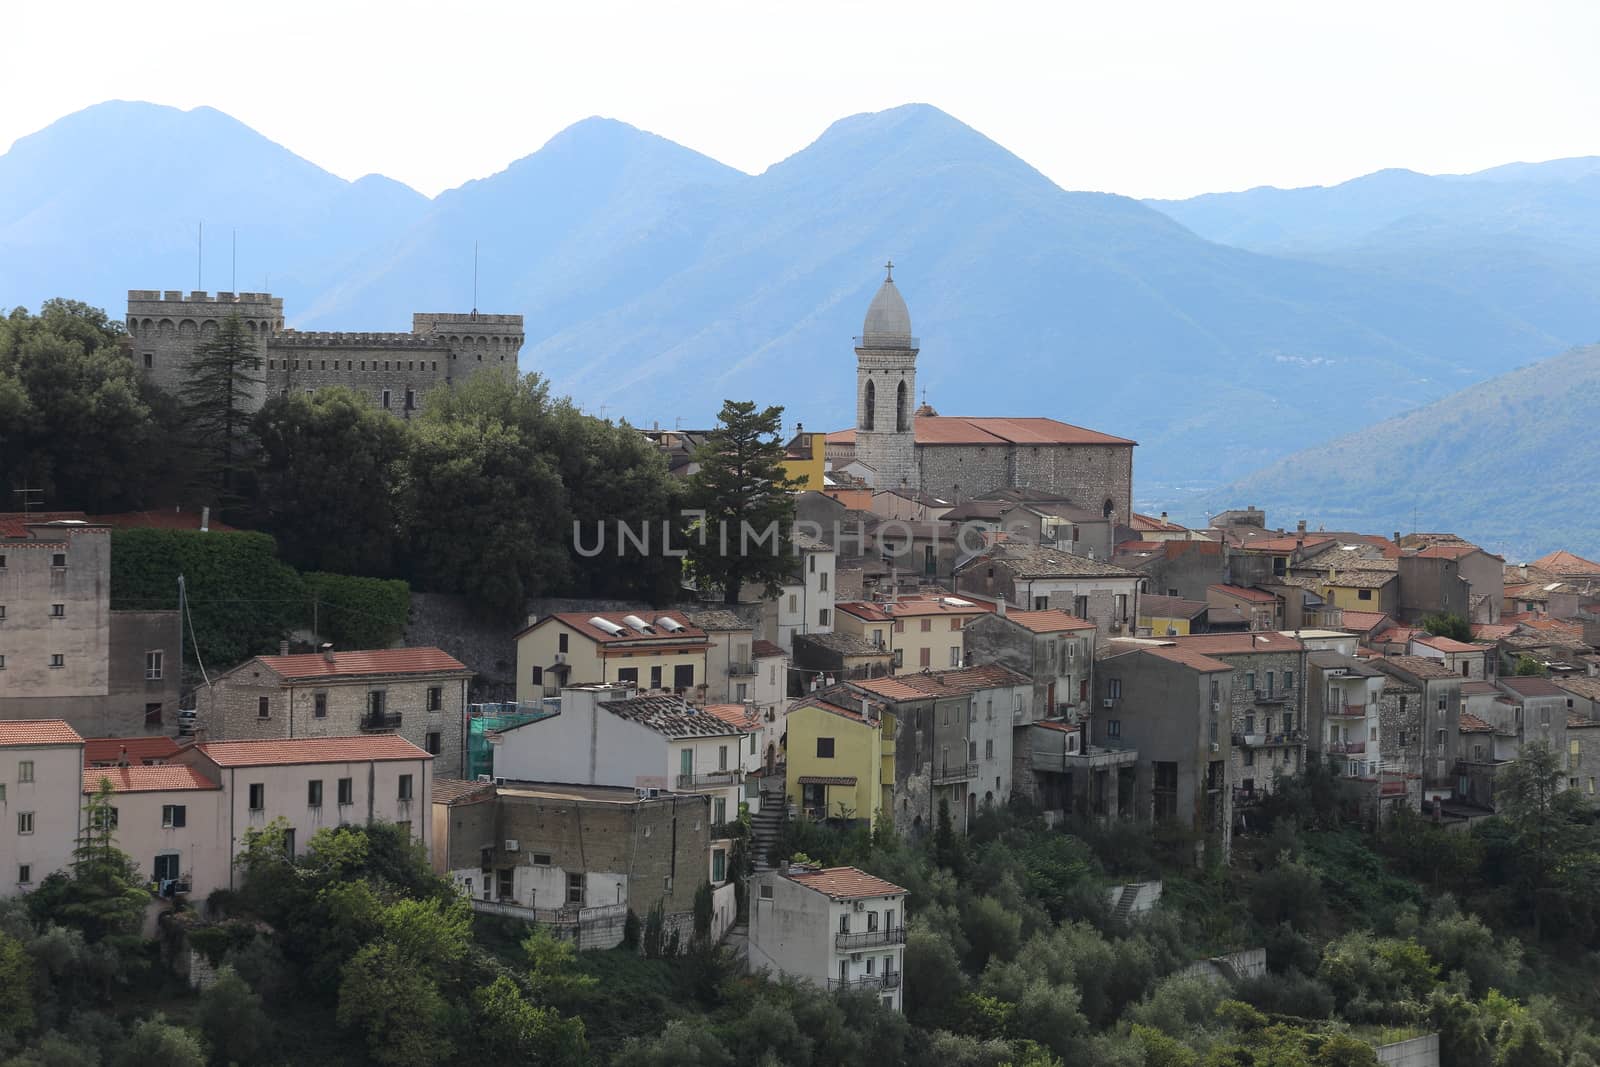 Monteroduni, Italy - September 15, 2019: The town of Monteroduni and view of the Pignatelli Castle